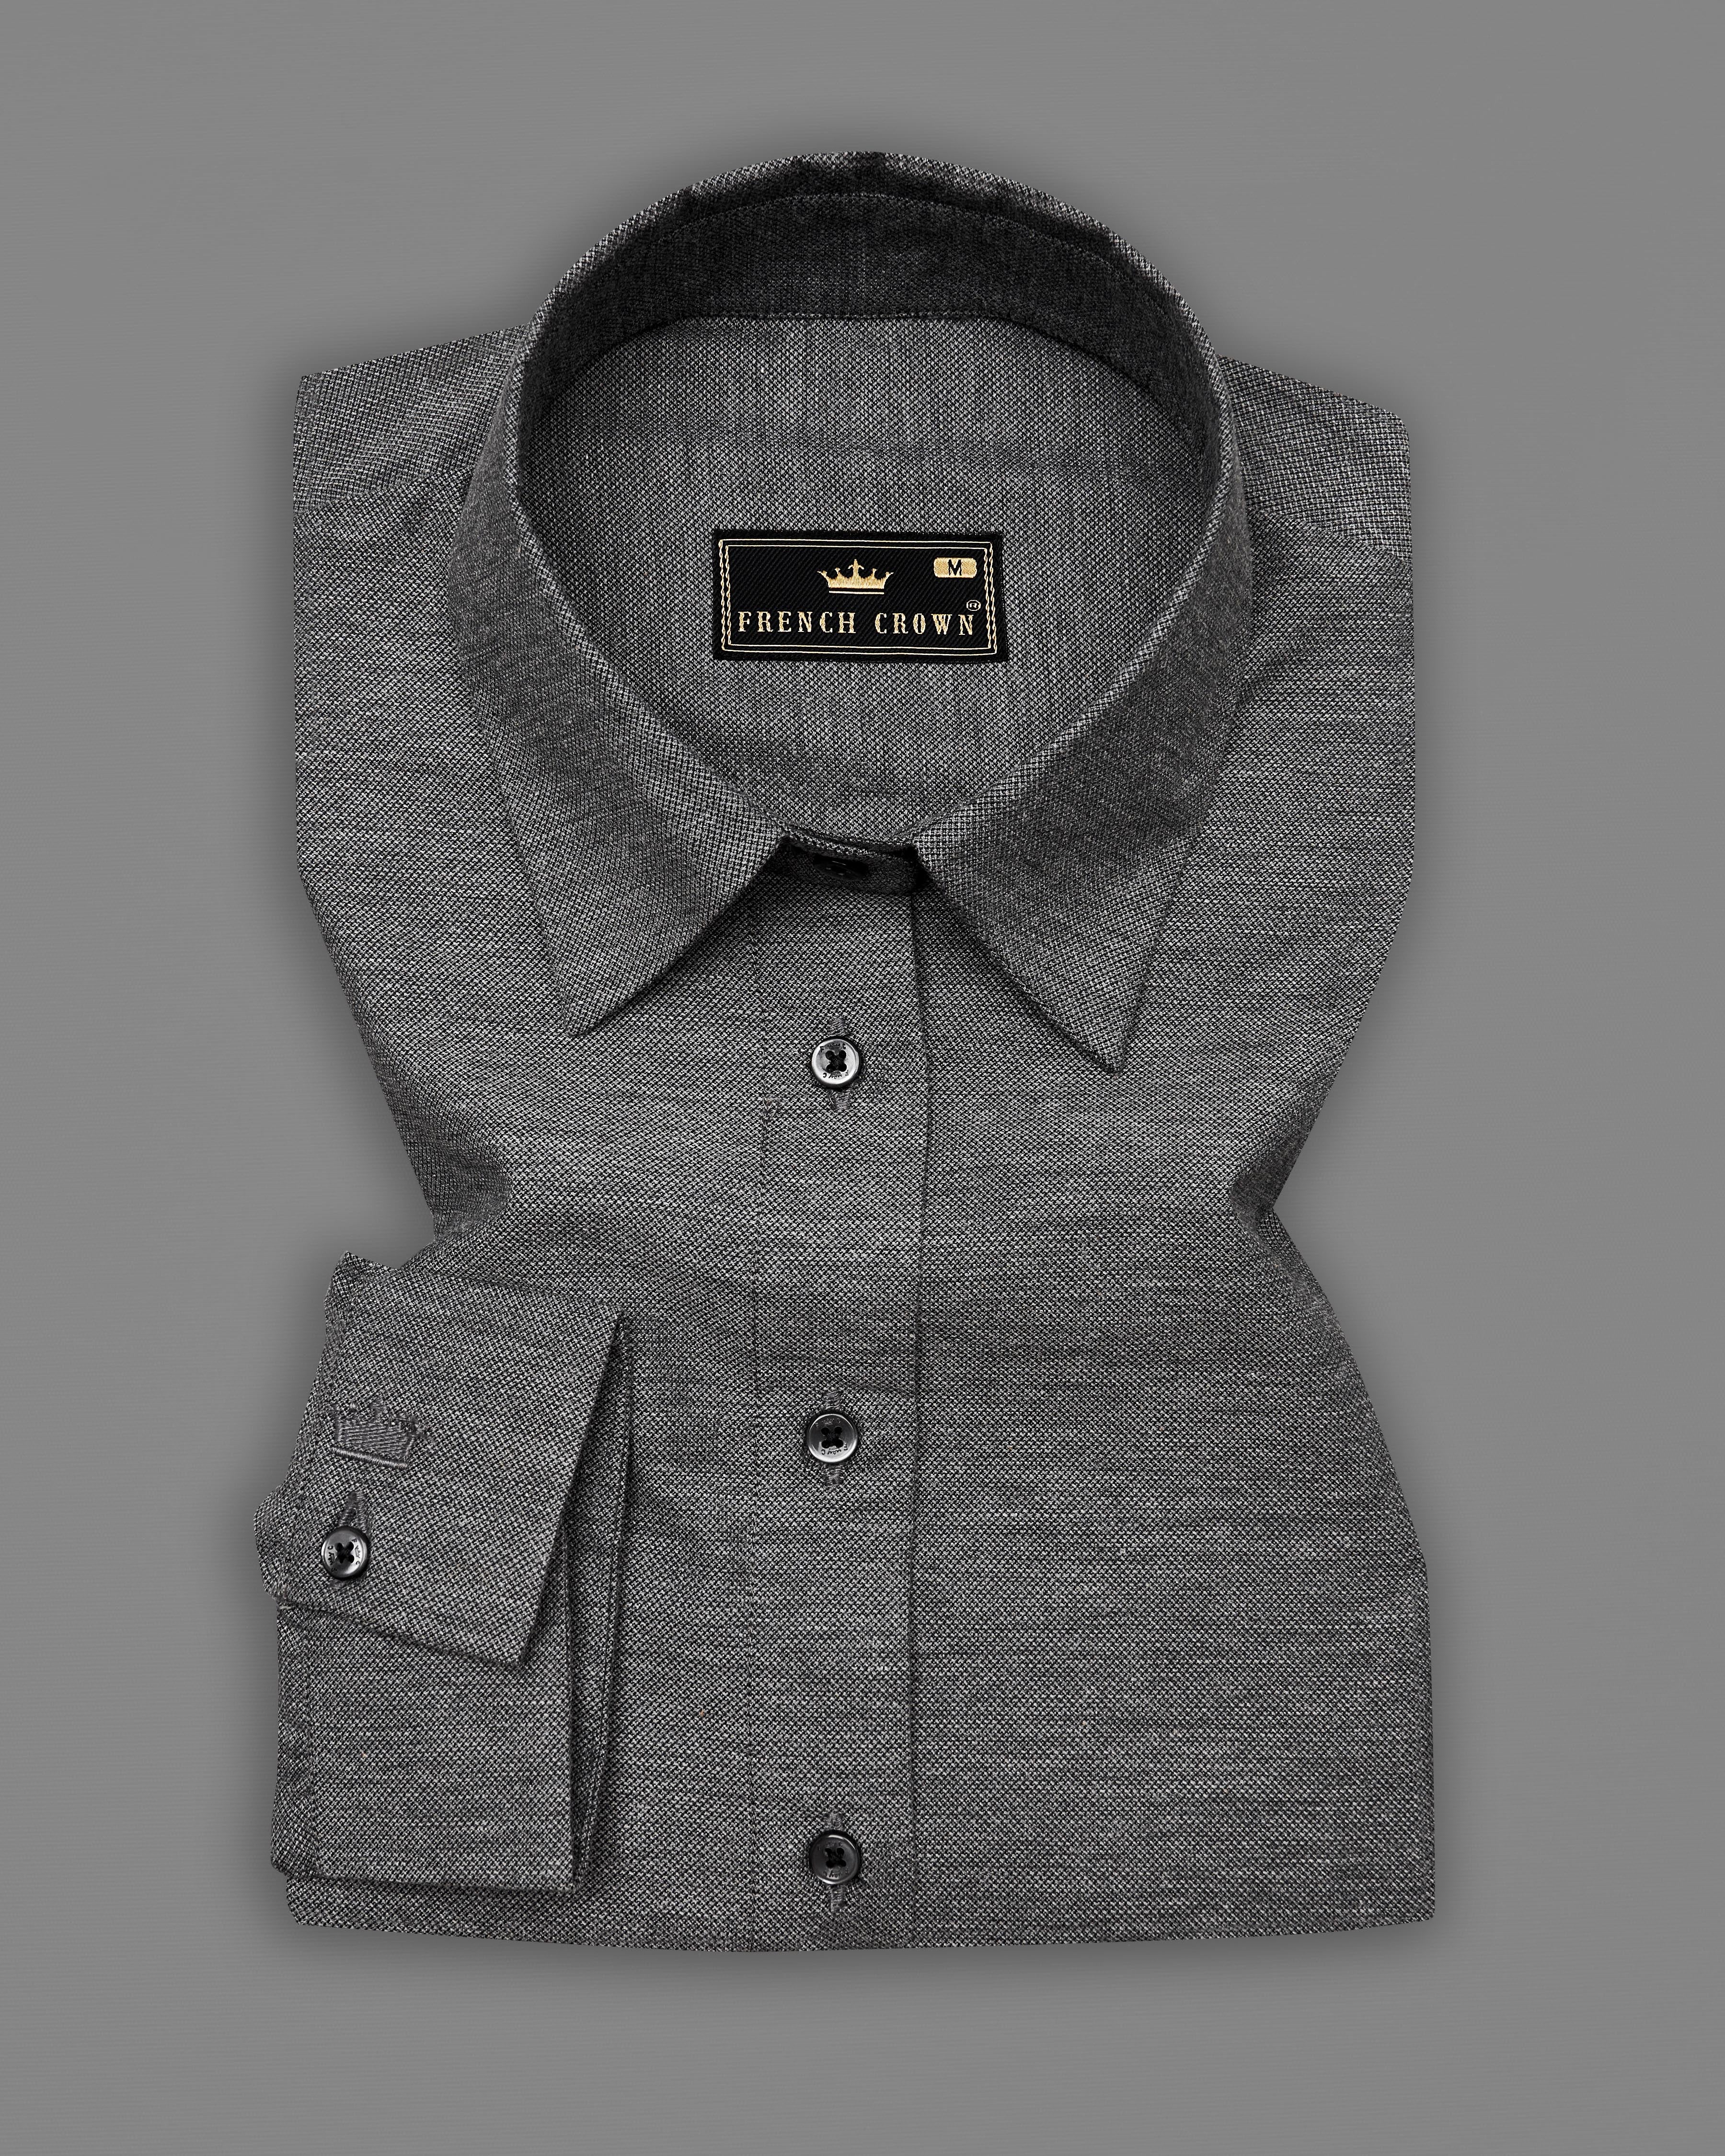 Concord Gray Premium Cotton ShirtWS044-BLK-32, WS044-BLK-34, WS044-BLK-36, WS044-BLK-38, WS044-BLK-40, WS044-BLK-42